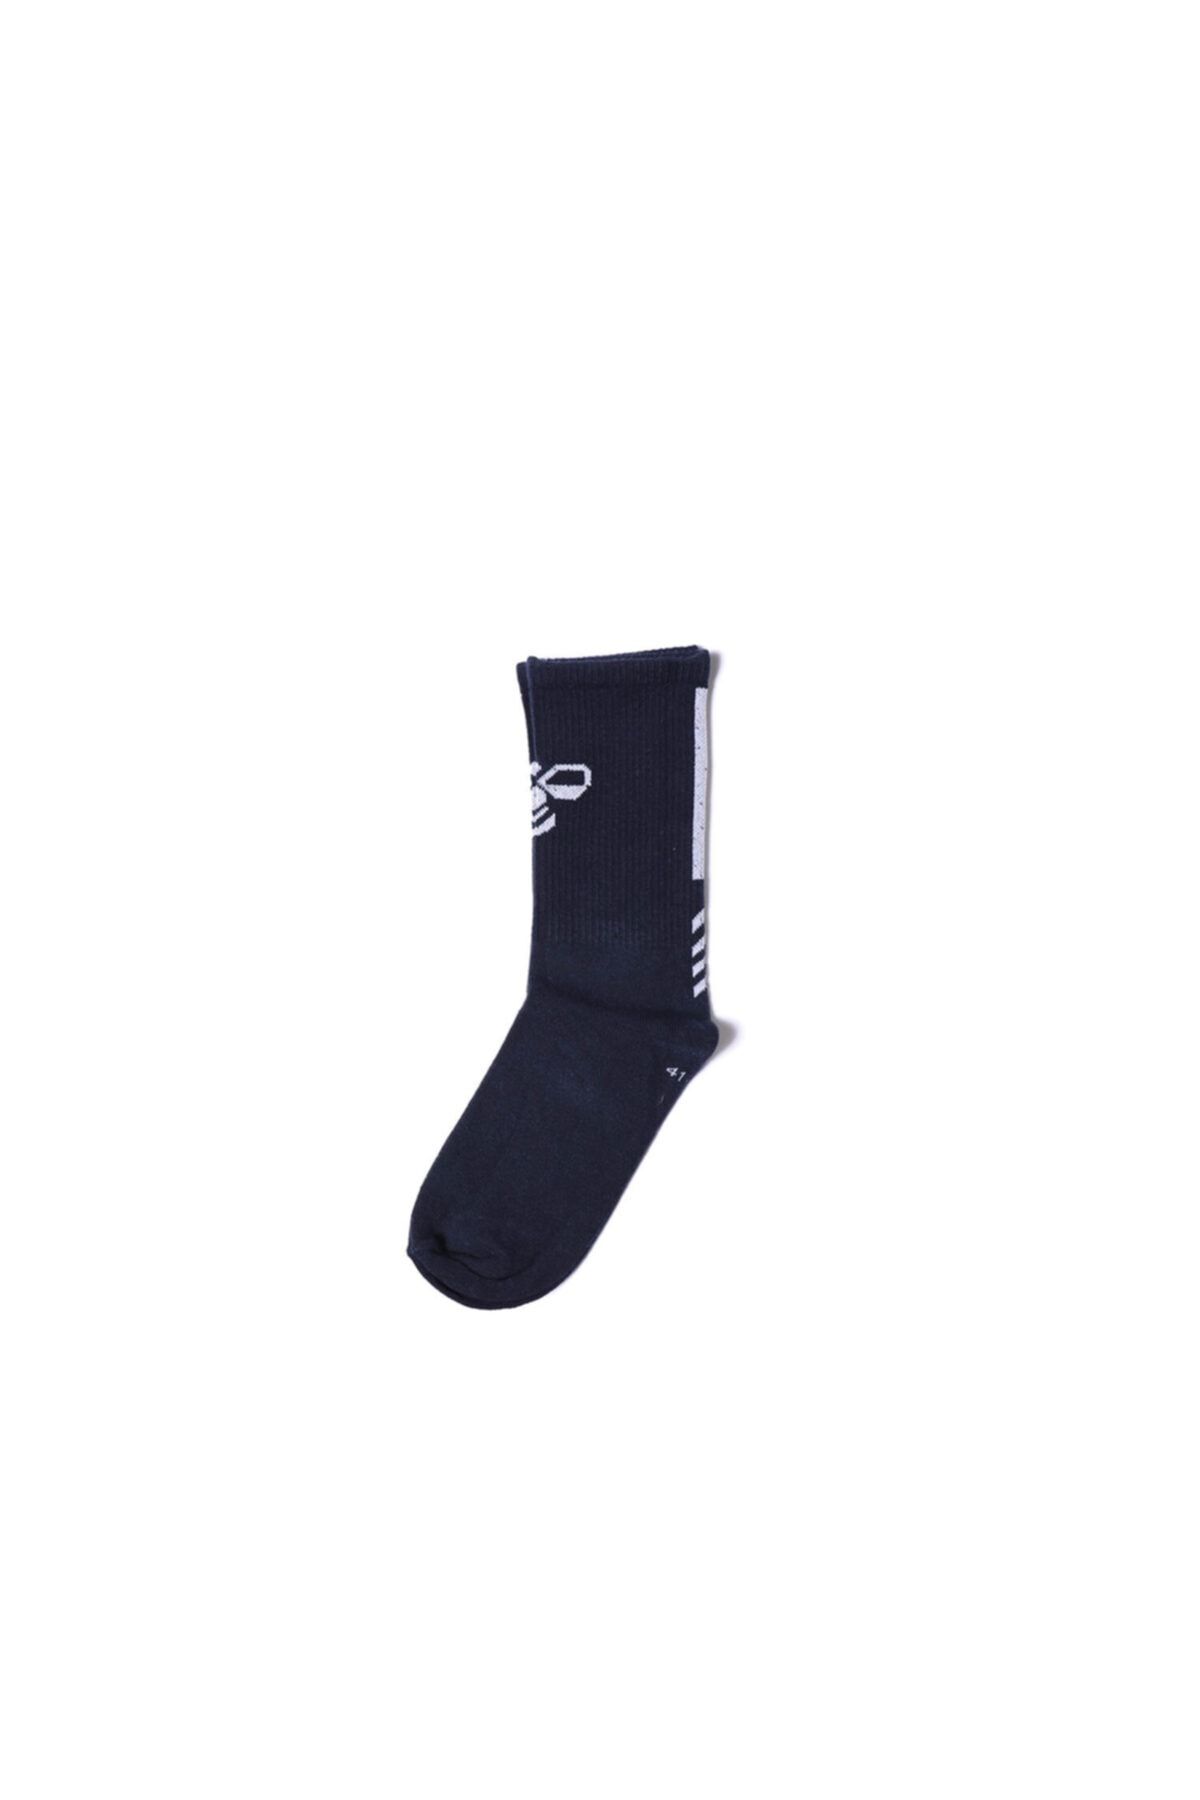 hummel Hml Storke Medıum Sıze Socks